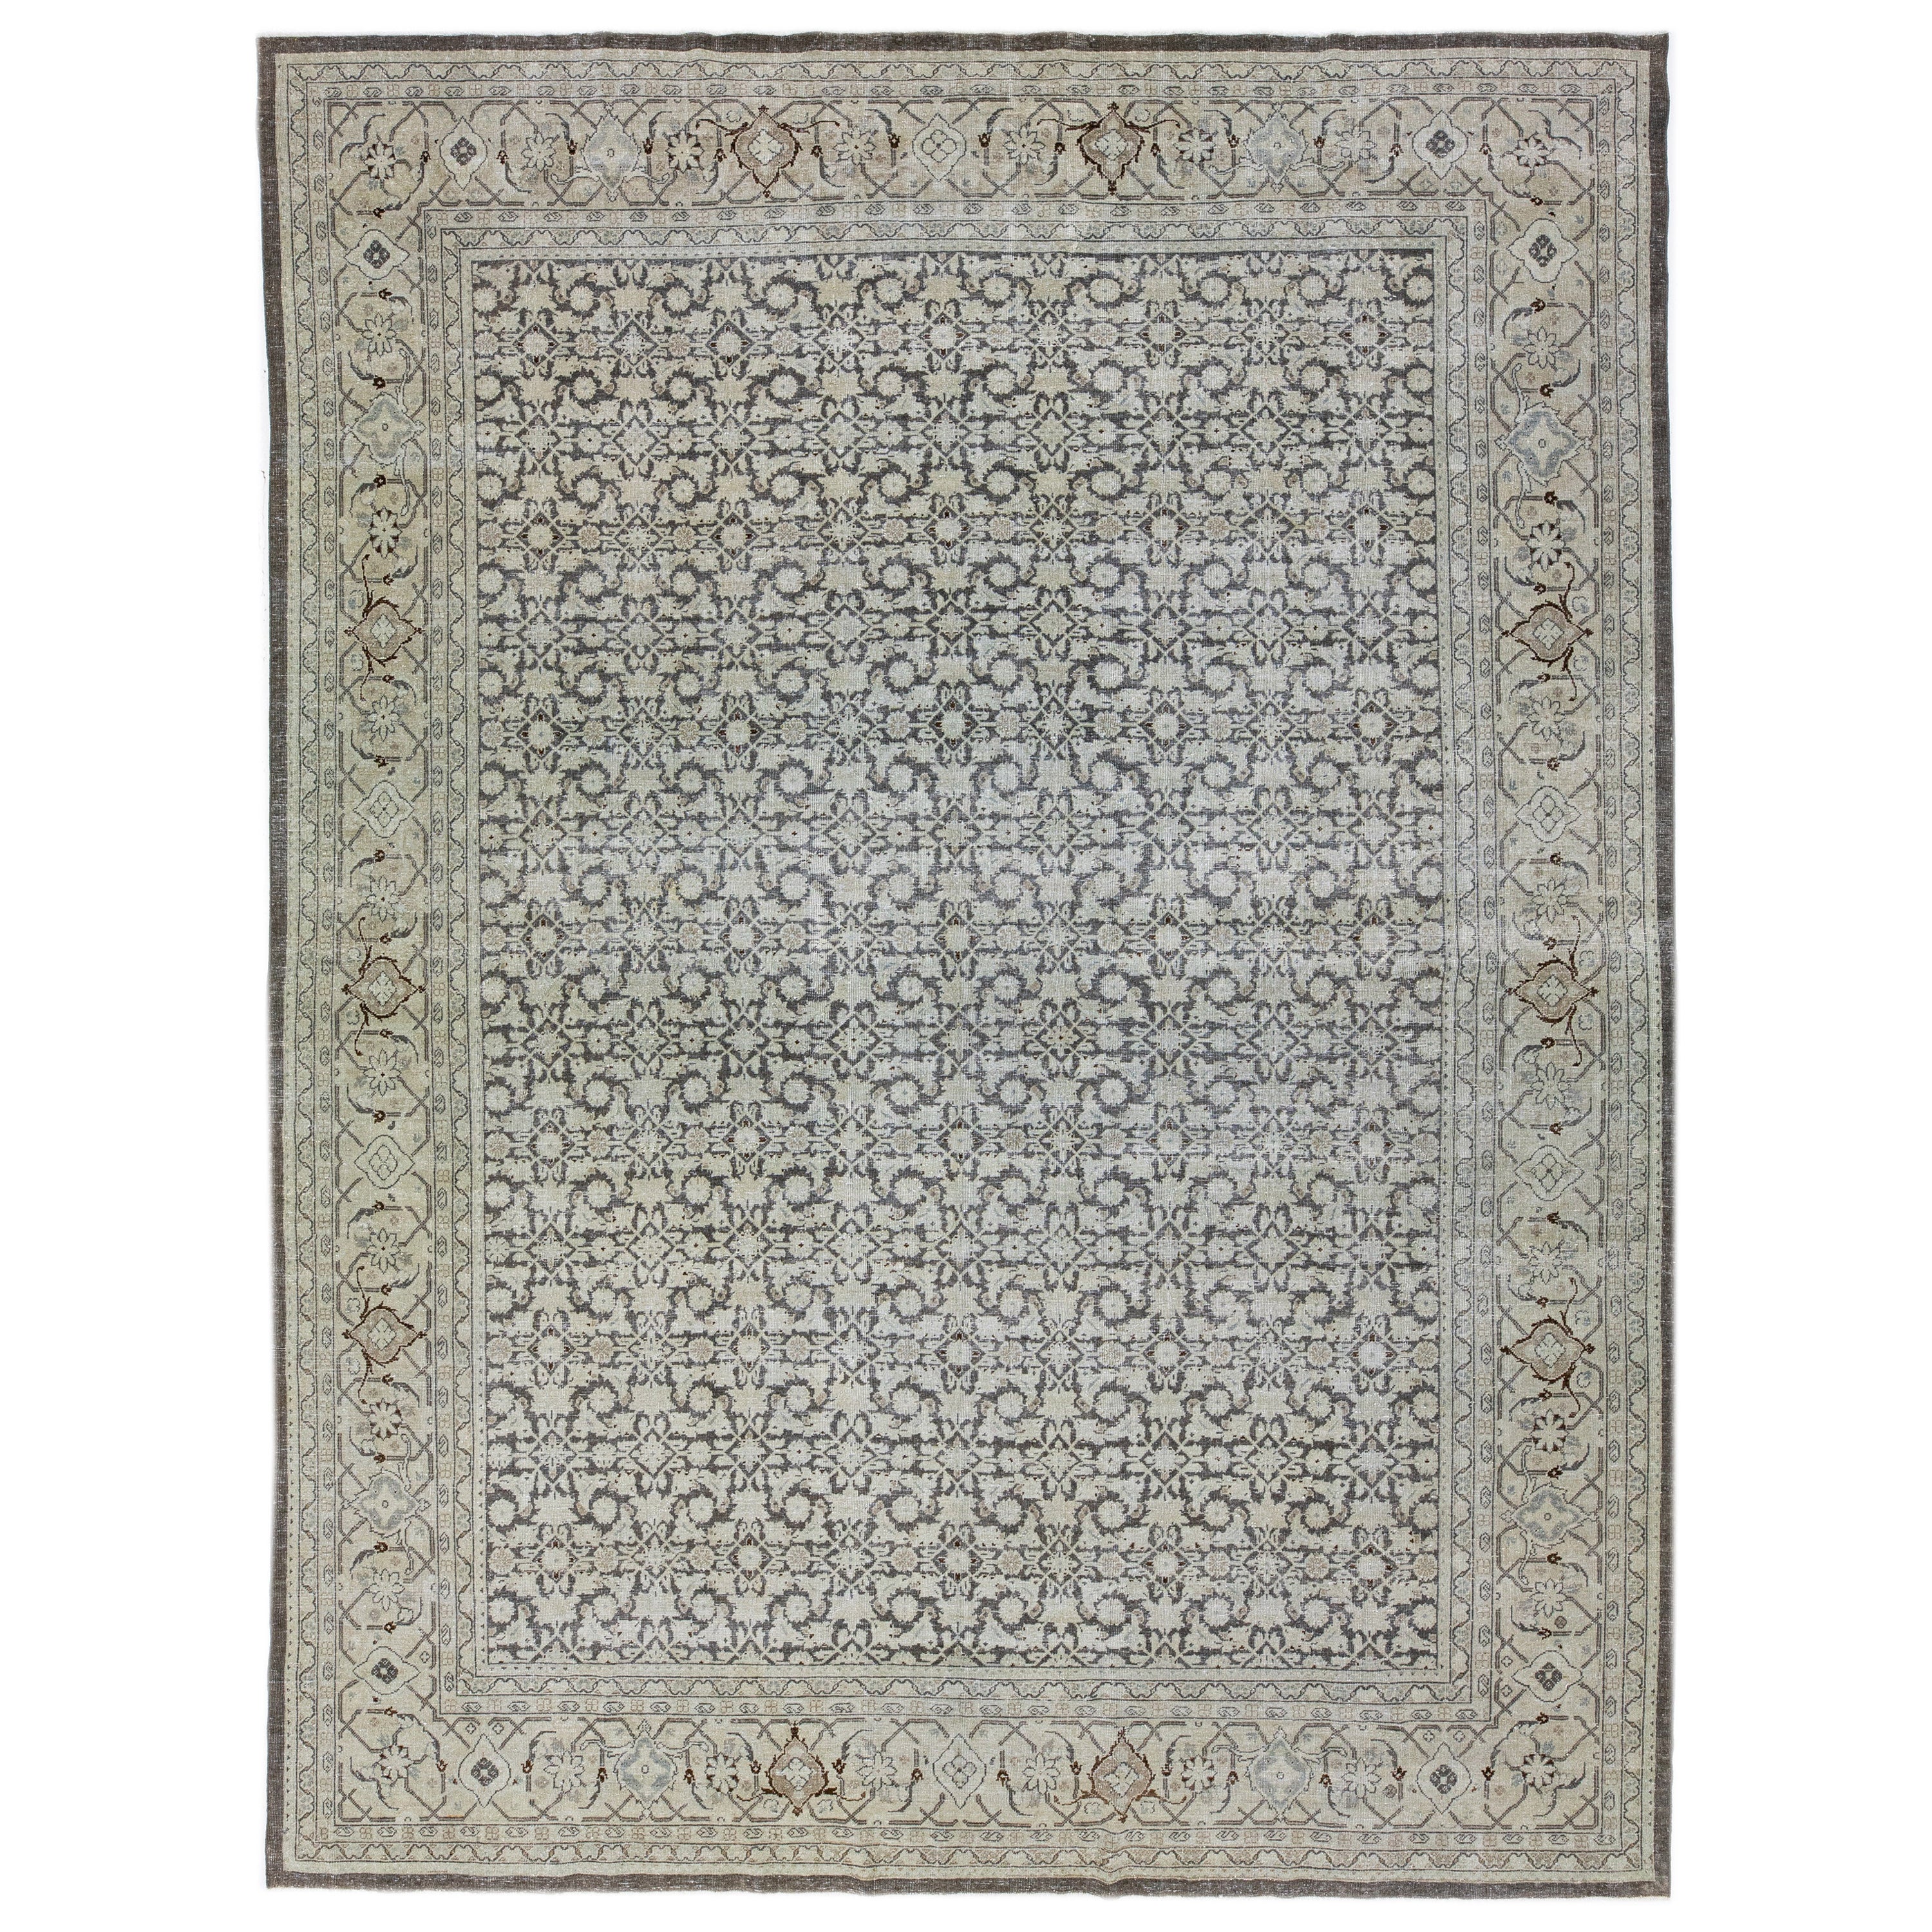 1900s Allover Persian Tabriz Handmade Wool Rug in Gray & Beige